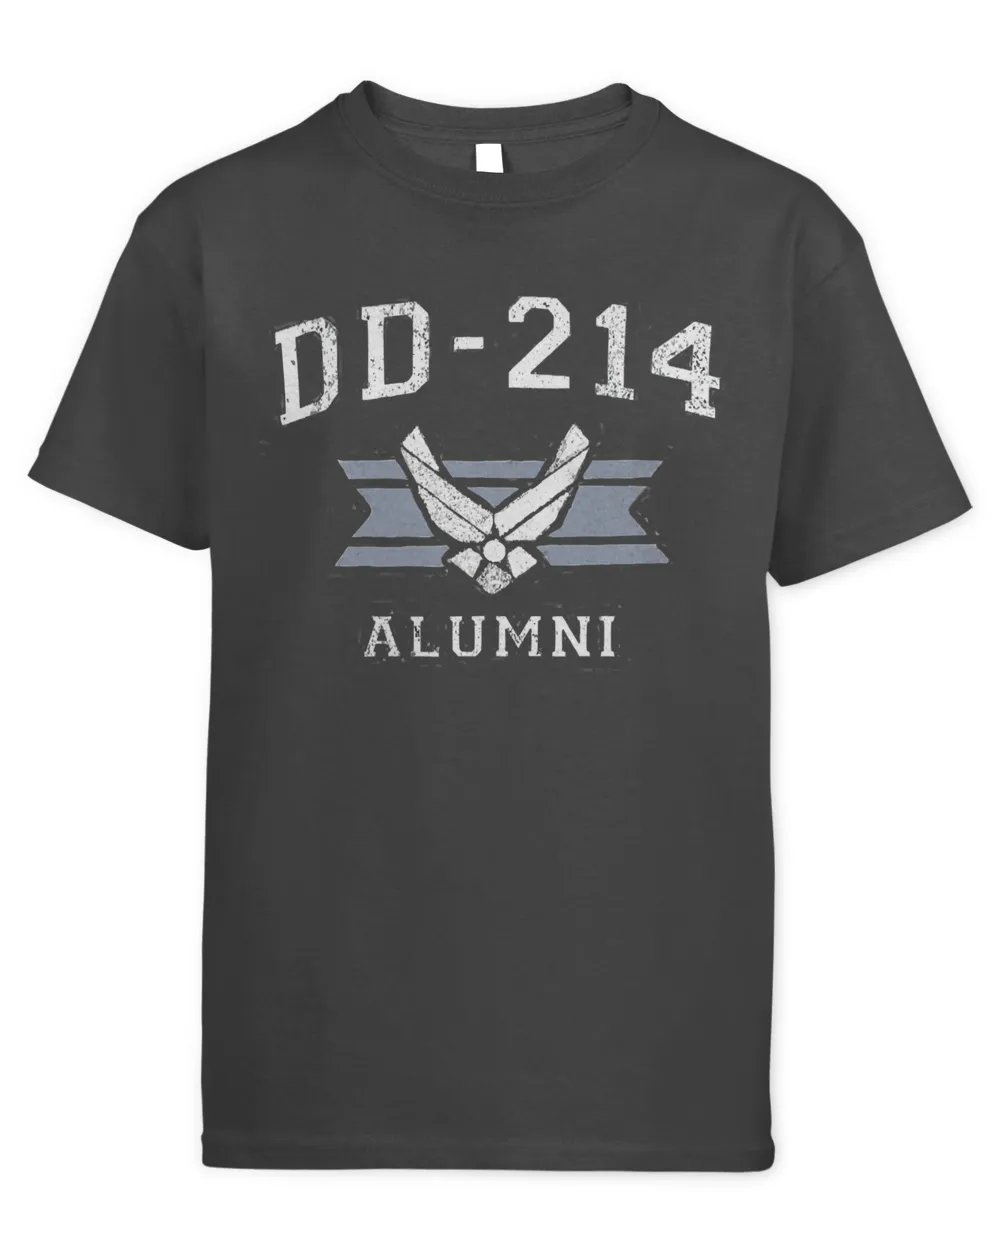 u.s. air force veteran christmas gift usaf dd 214 alumni logo t shirt